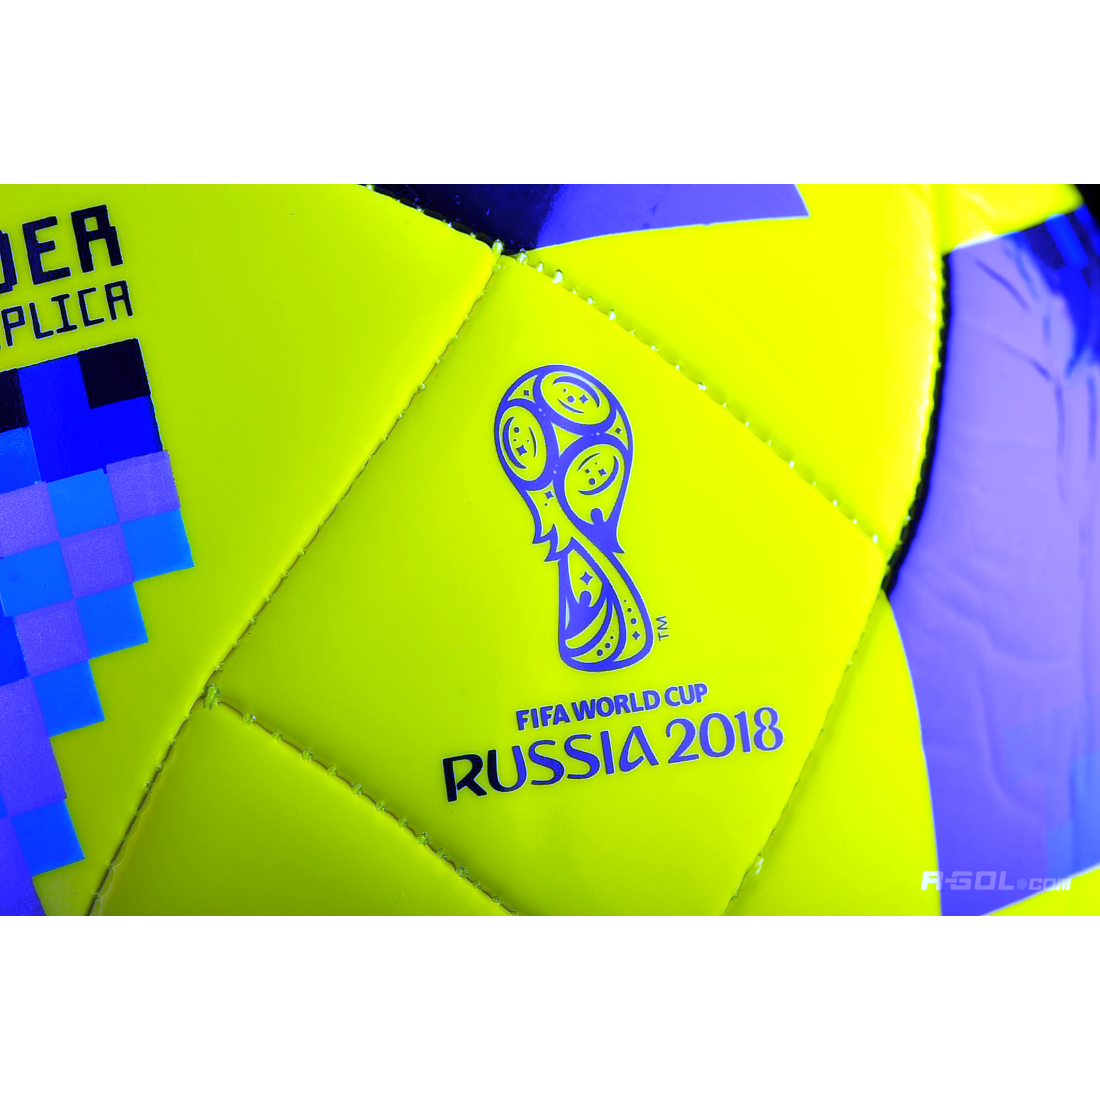 Minge fotbal Adidas World Cup, galben-albastru